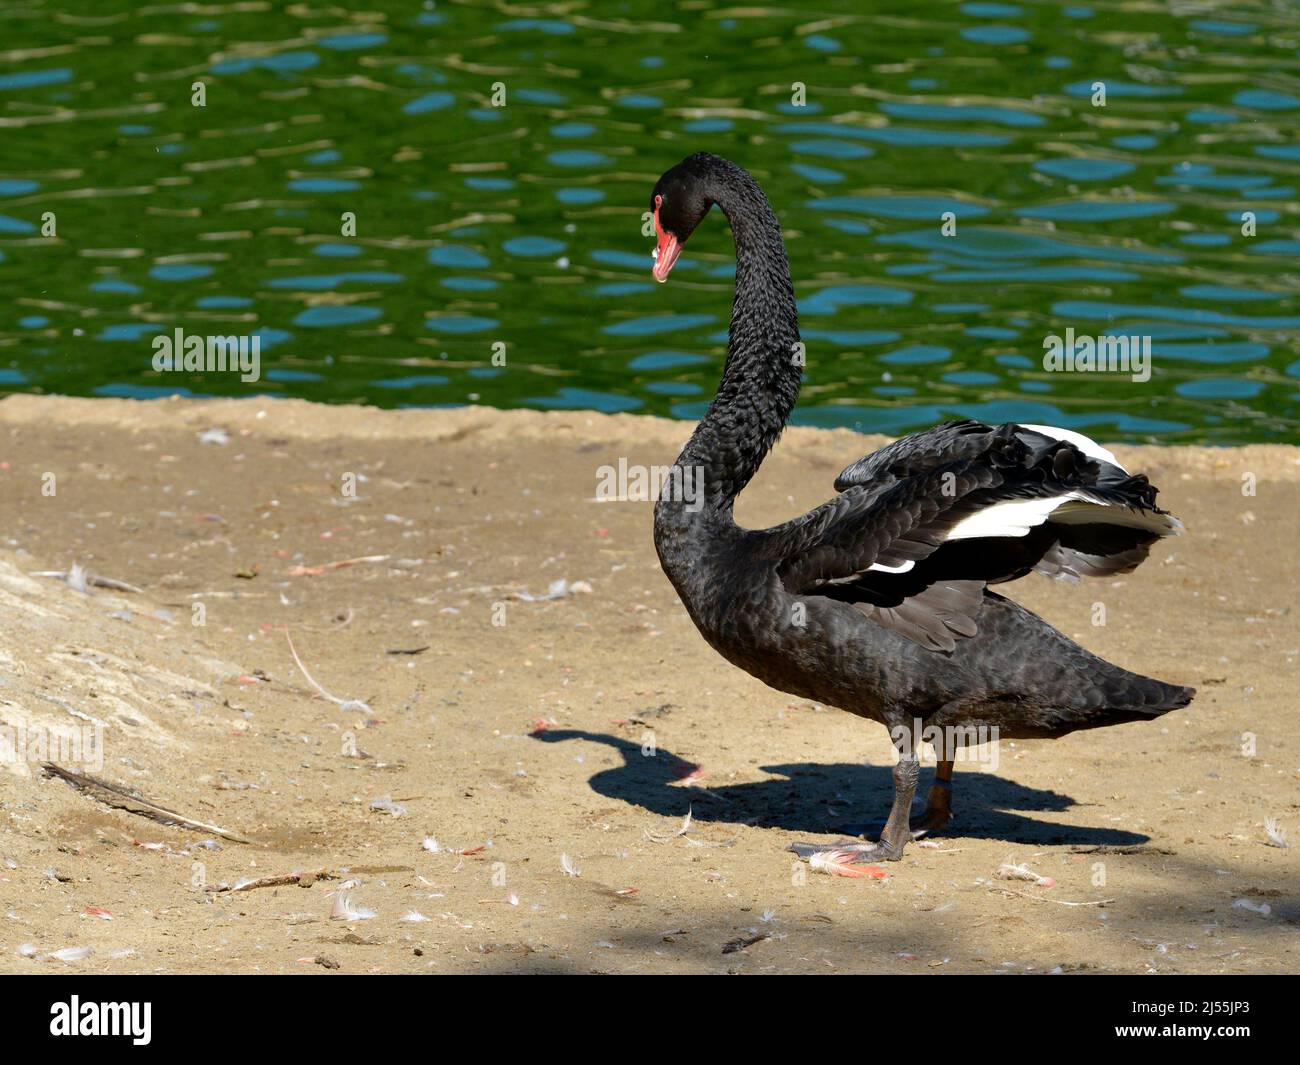 Black swan (Cygnus atratus) standing on ground near a pond Stock Photo